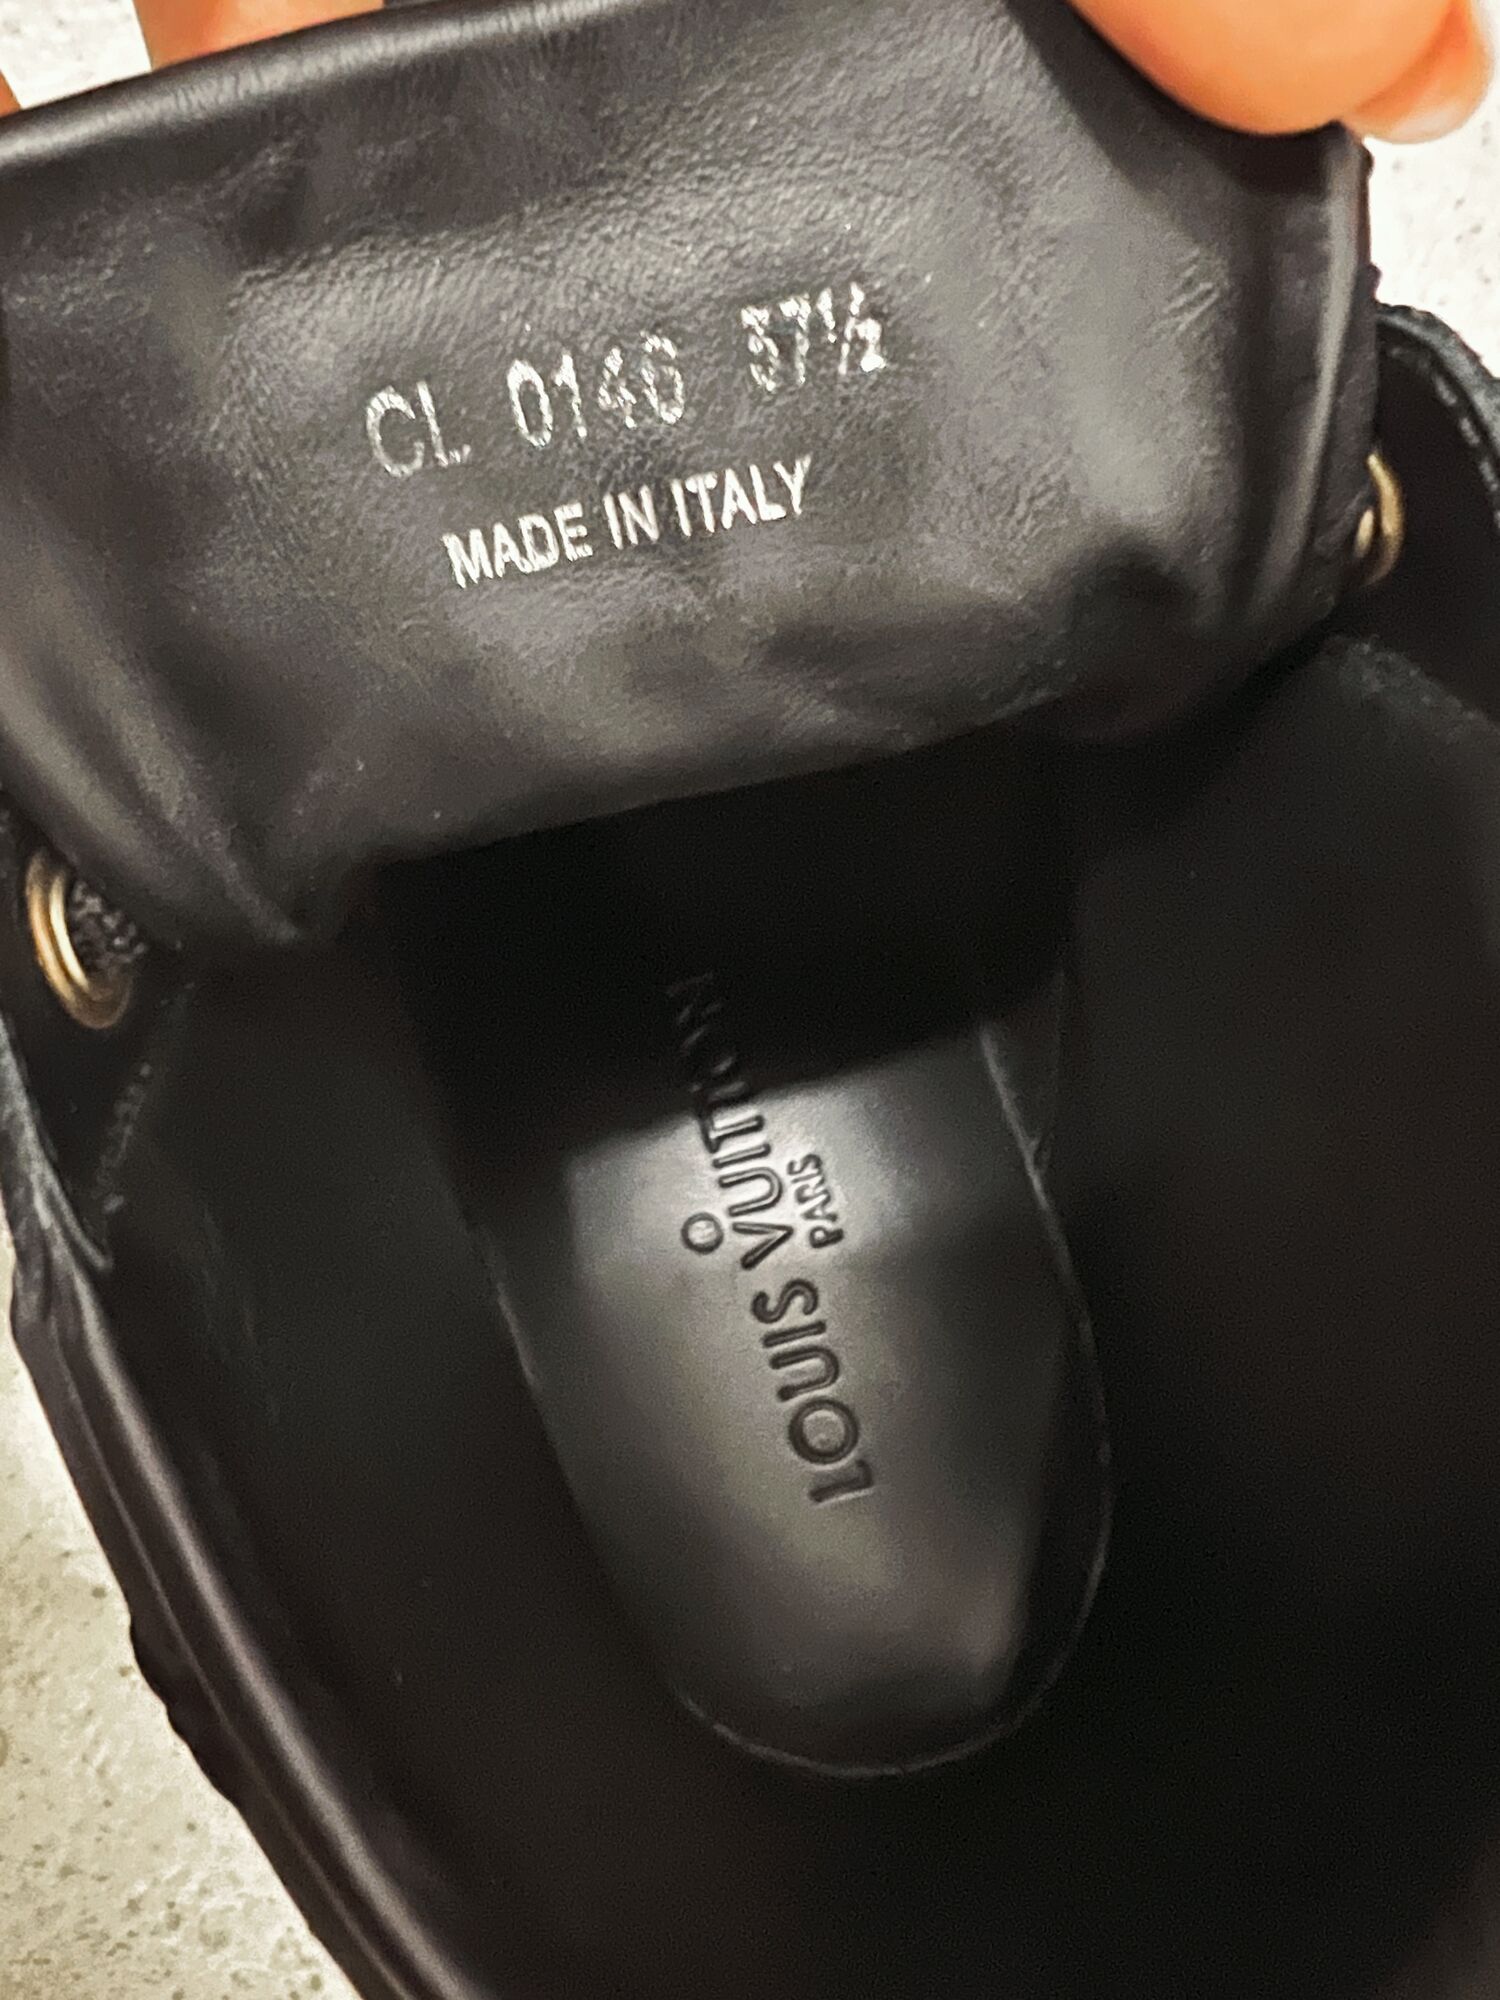 Suede Platform Sneakers Louis Vuitton - IT 37.5, buy pre-owned at 900 EUR